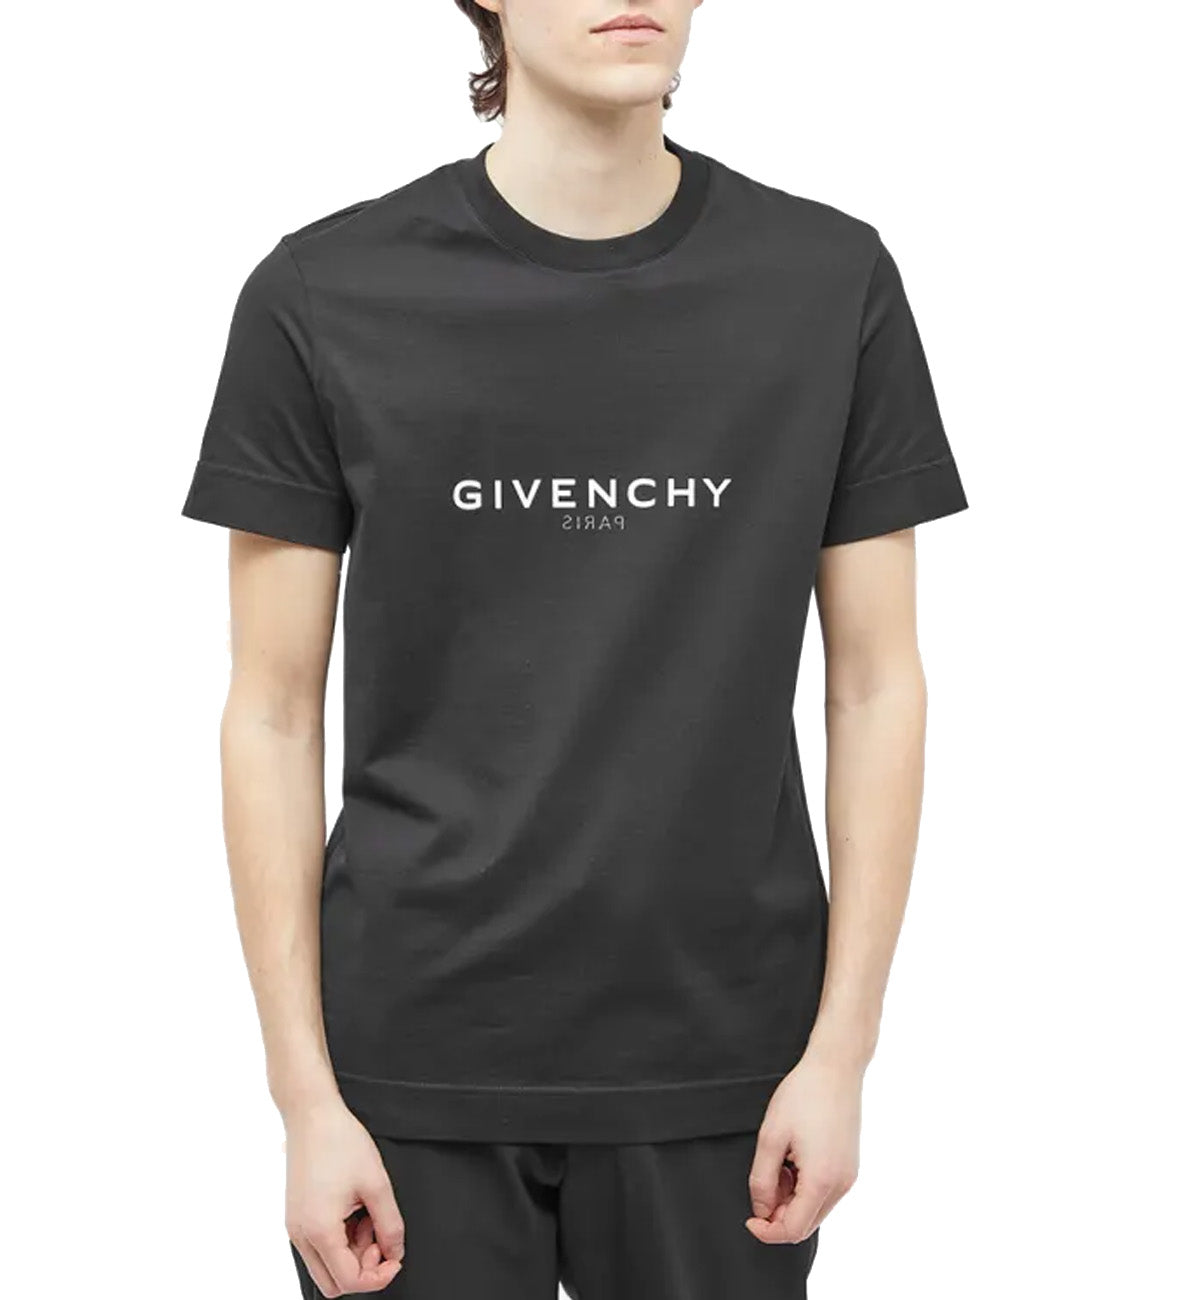 Givenchy Reverse Tee Black (Black)